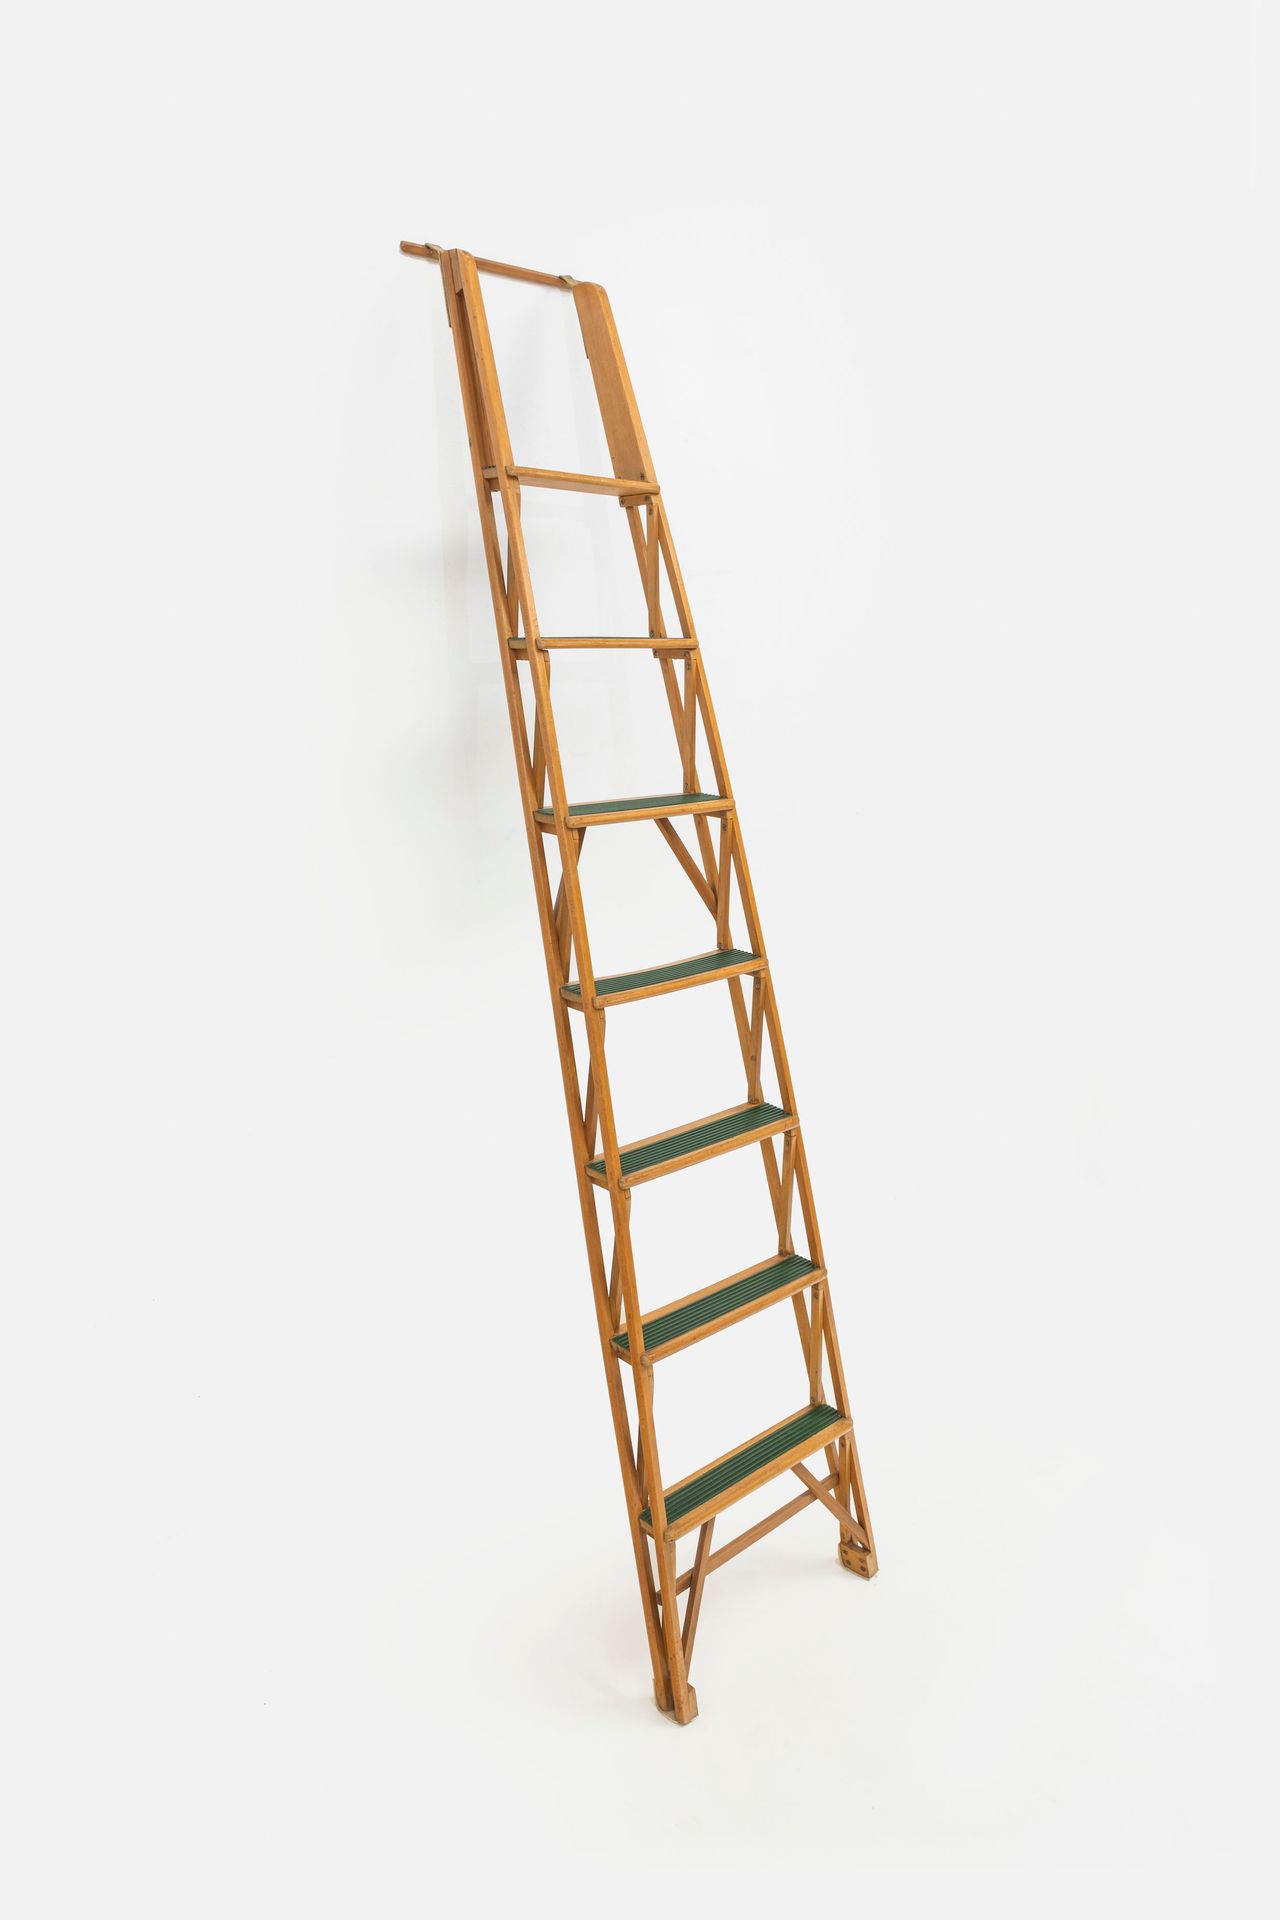 FRANCO ALBINI (ATTRIB. A) Library ladder. Beech wood, plastic material.
212x48x8&hellip;